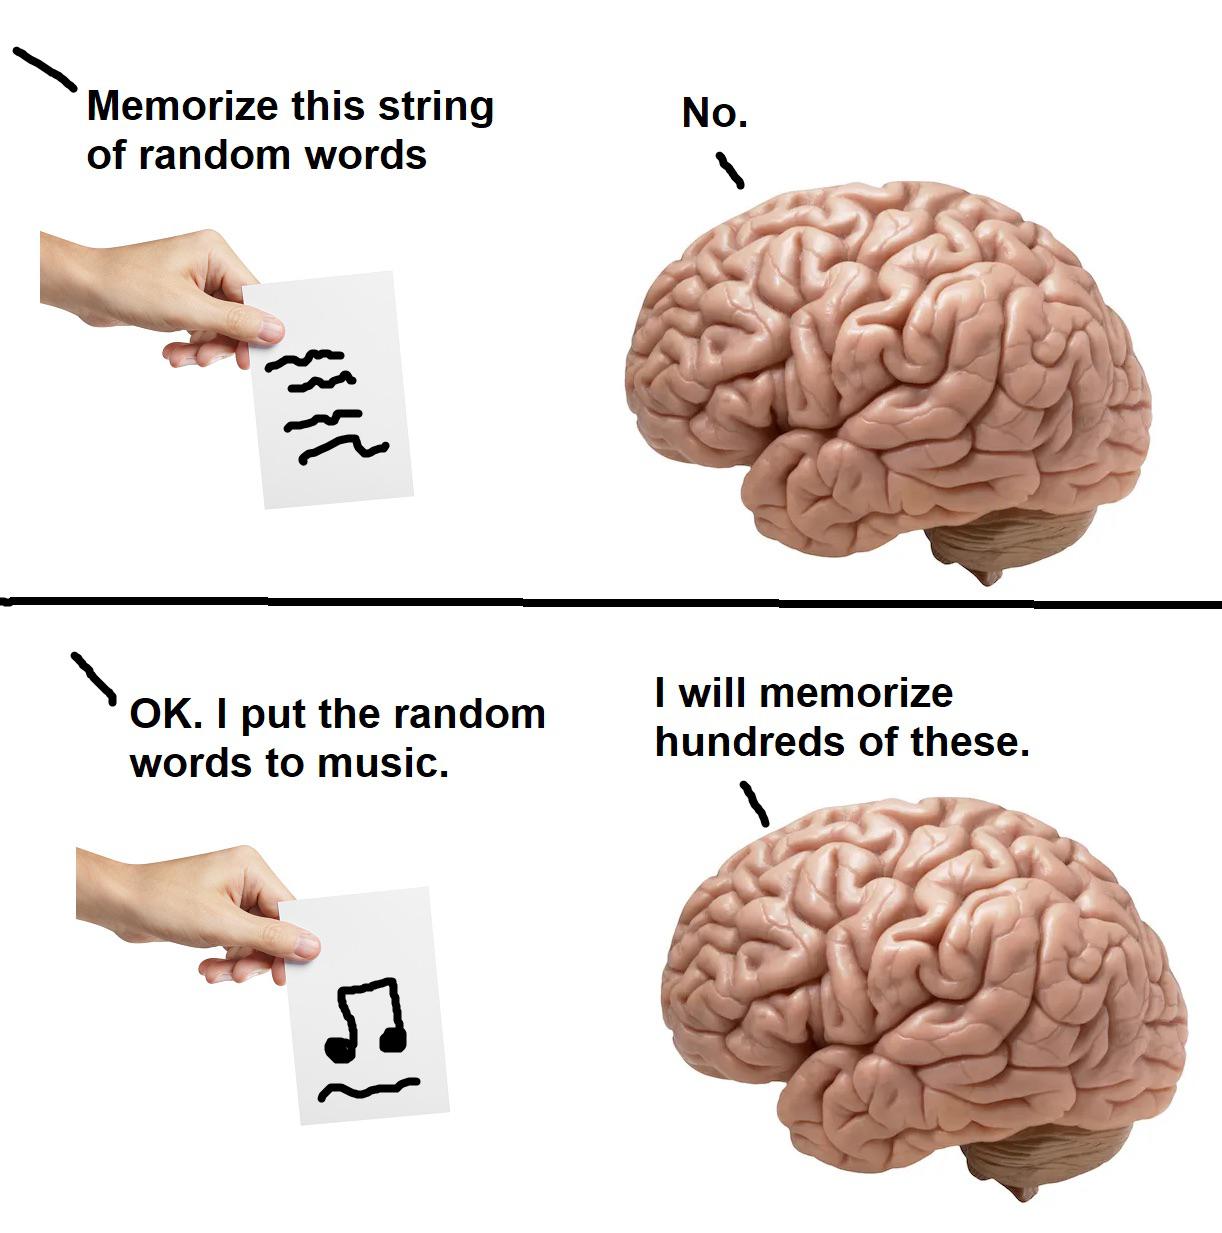 funny memes - neurologist - Memorize of random words this string Ok. I put the random words to music. Fol No. I will memorize hundreds of these.